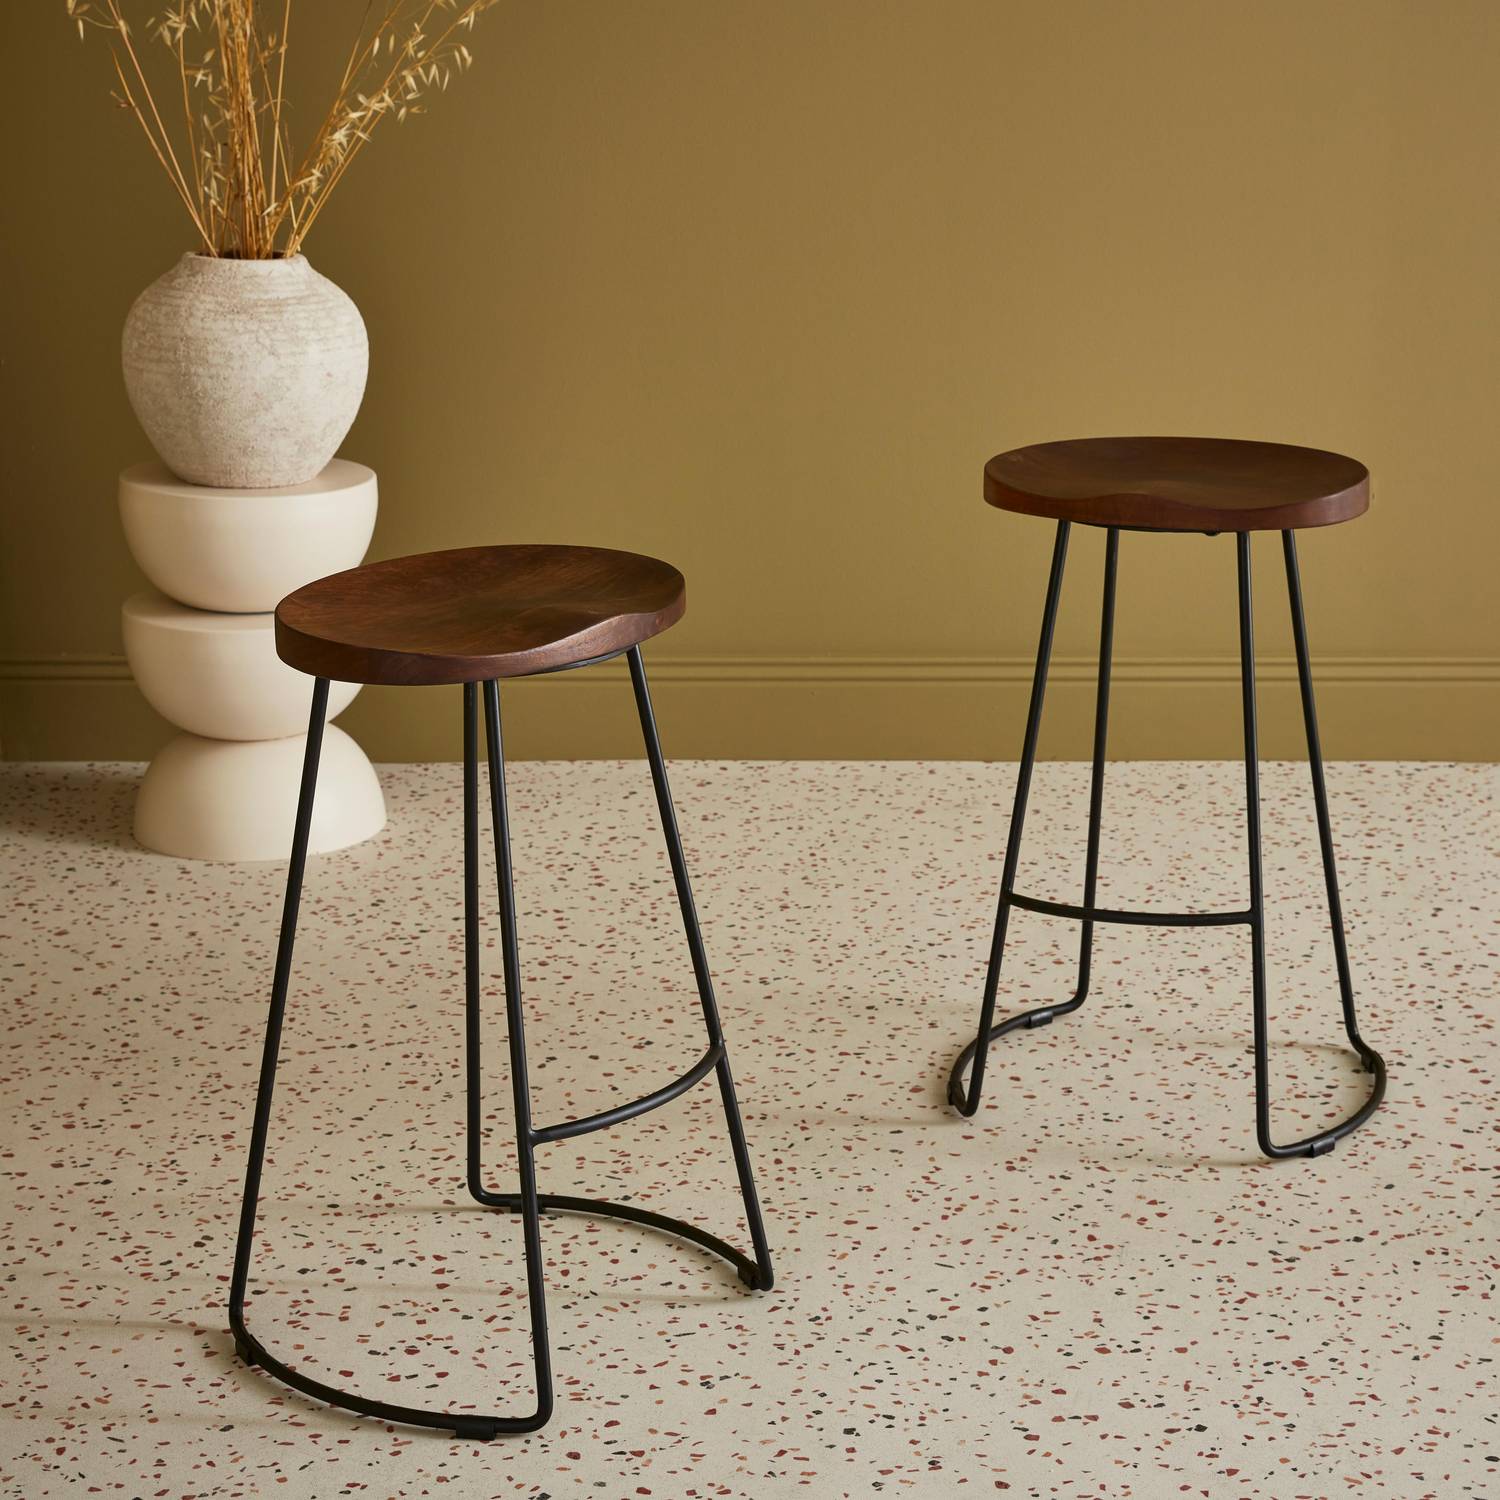 Pair of industrial metal and wooden bar stools, 44x36x65cm, Jaya, Light Walnut, Mango wood seat, black metal legs Photo1